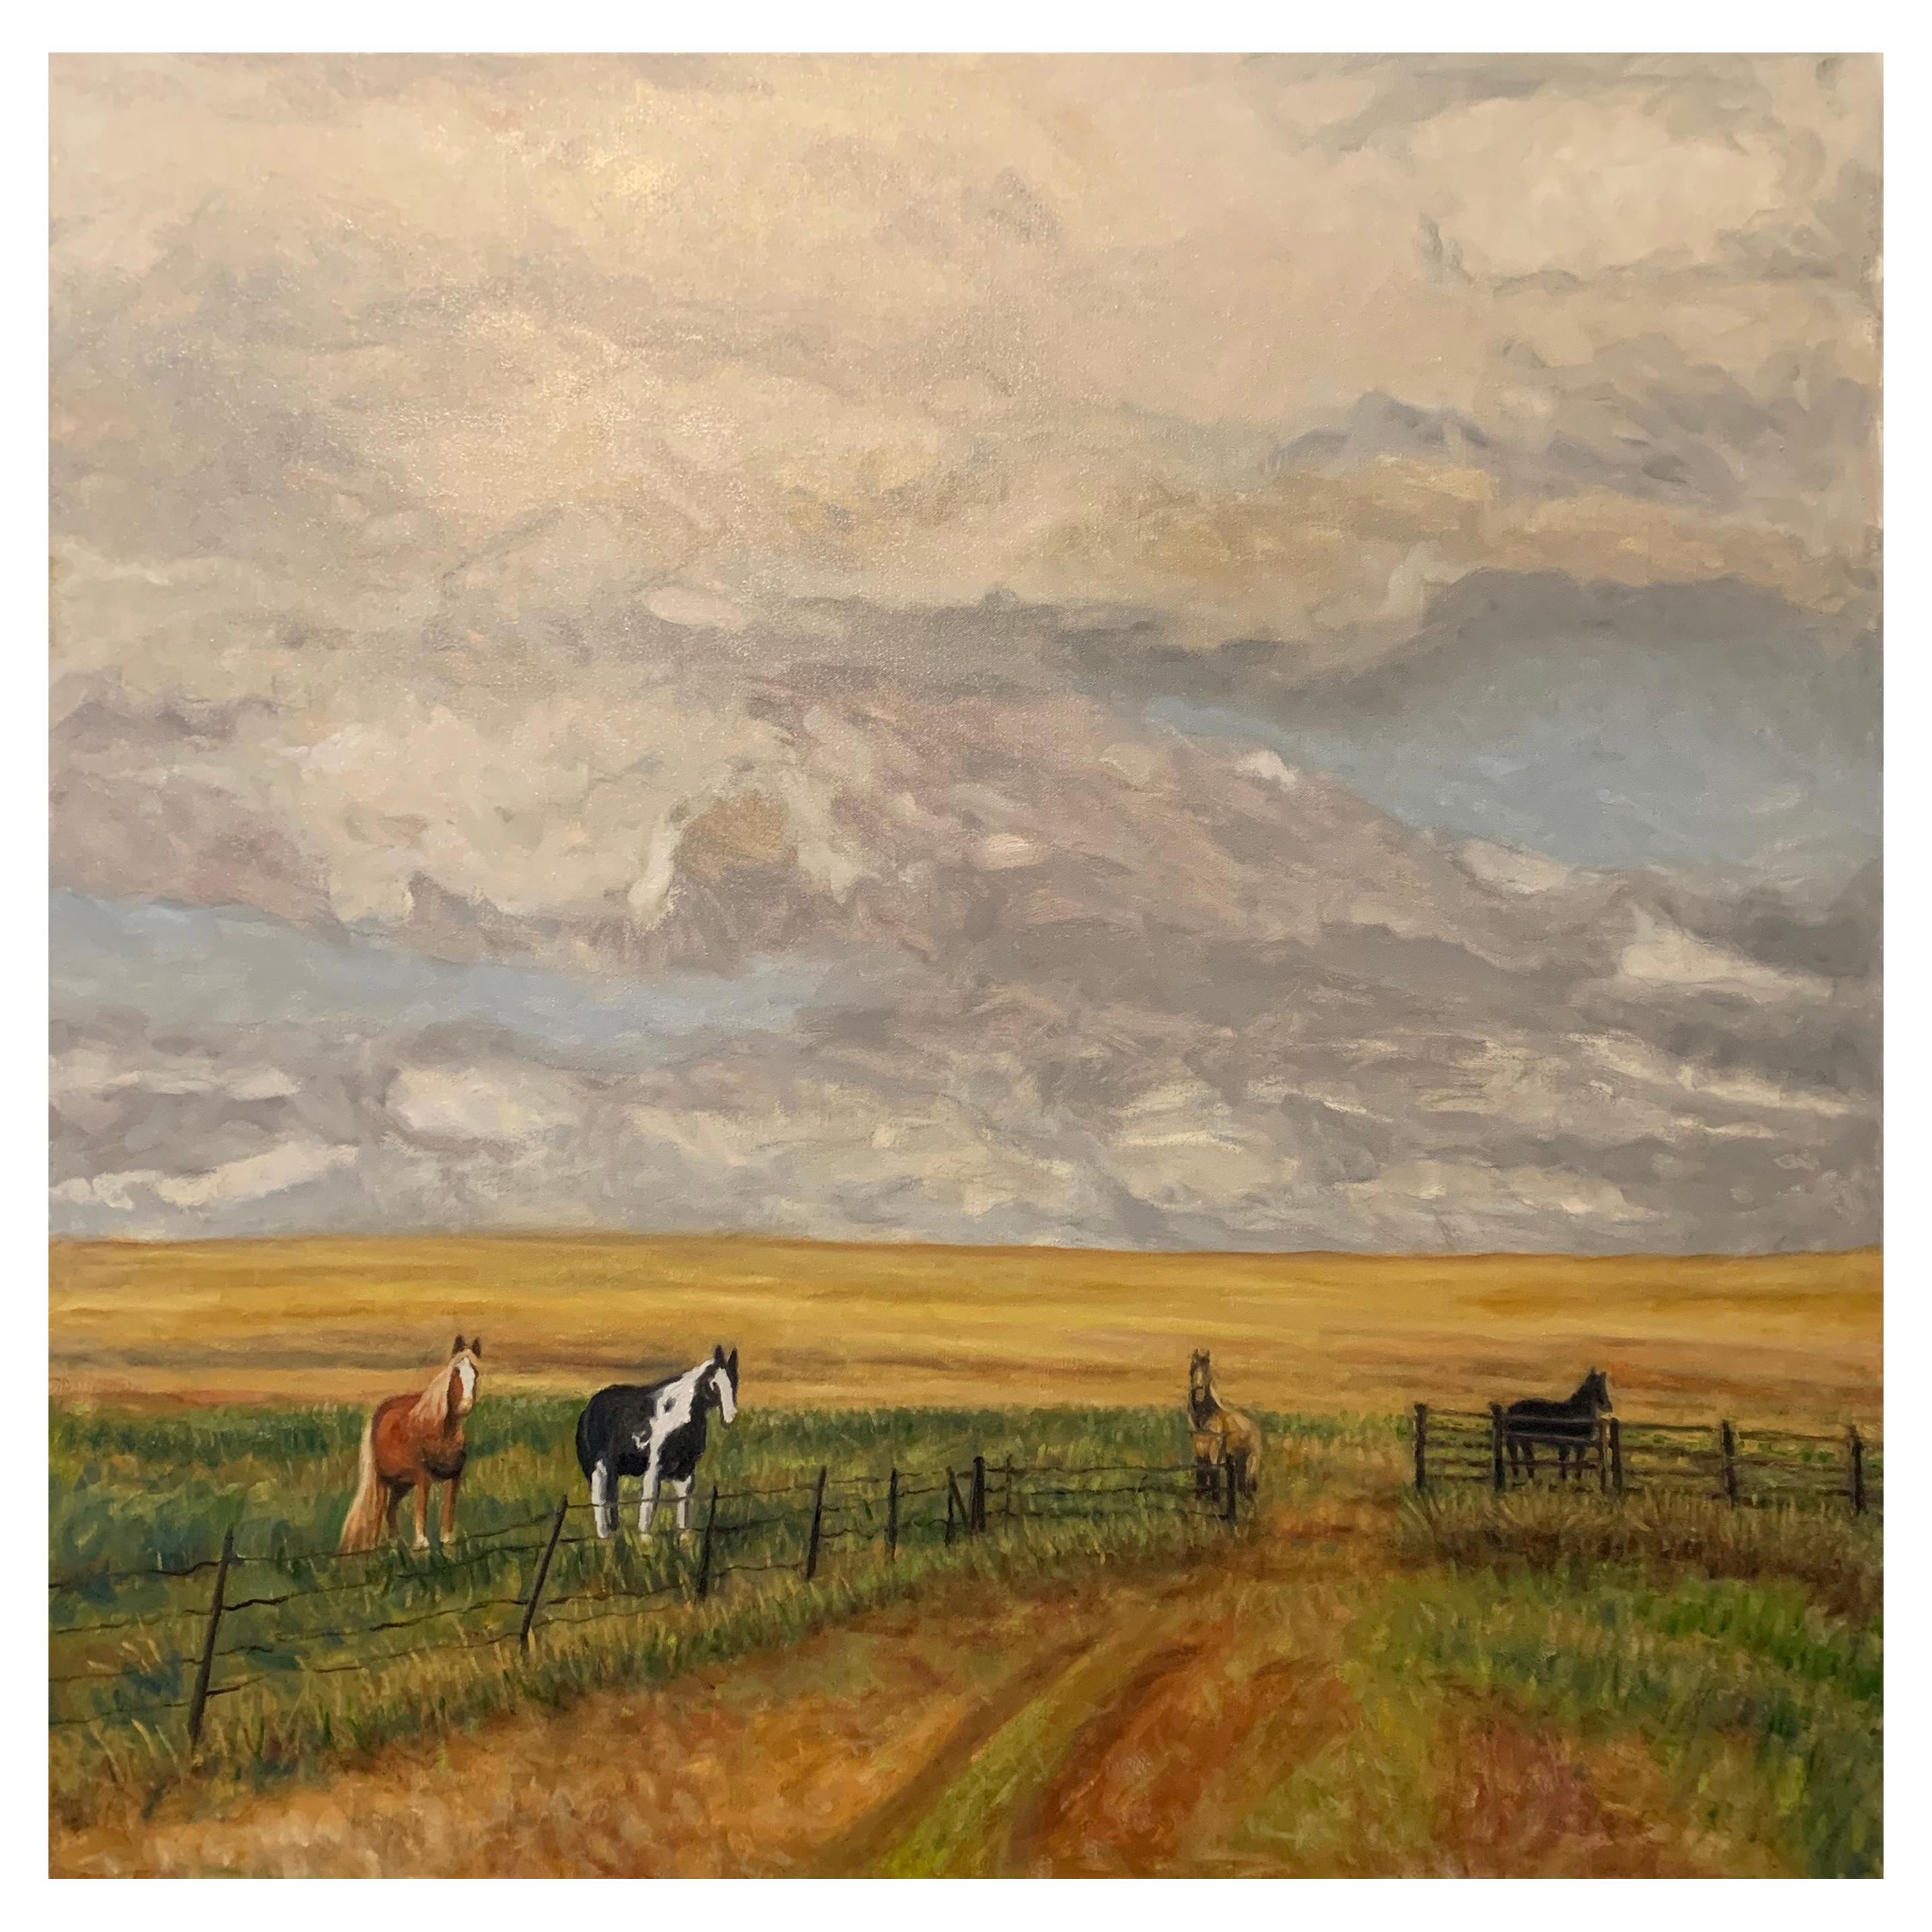 Oil on Canvas Painting "Big Sky Montana", Lawrence Snider, circa 2020